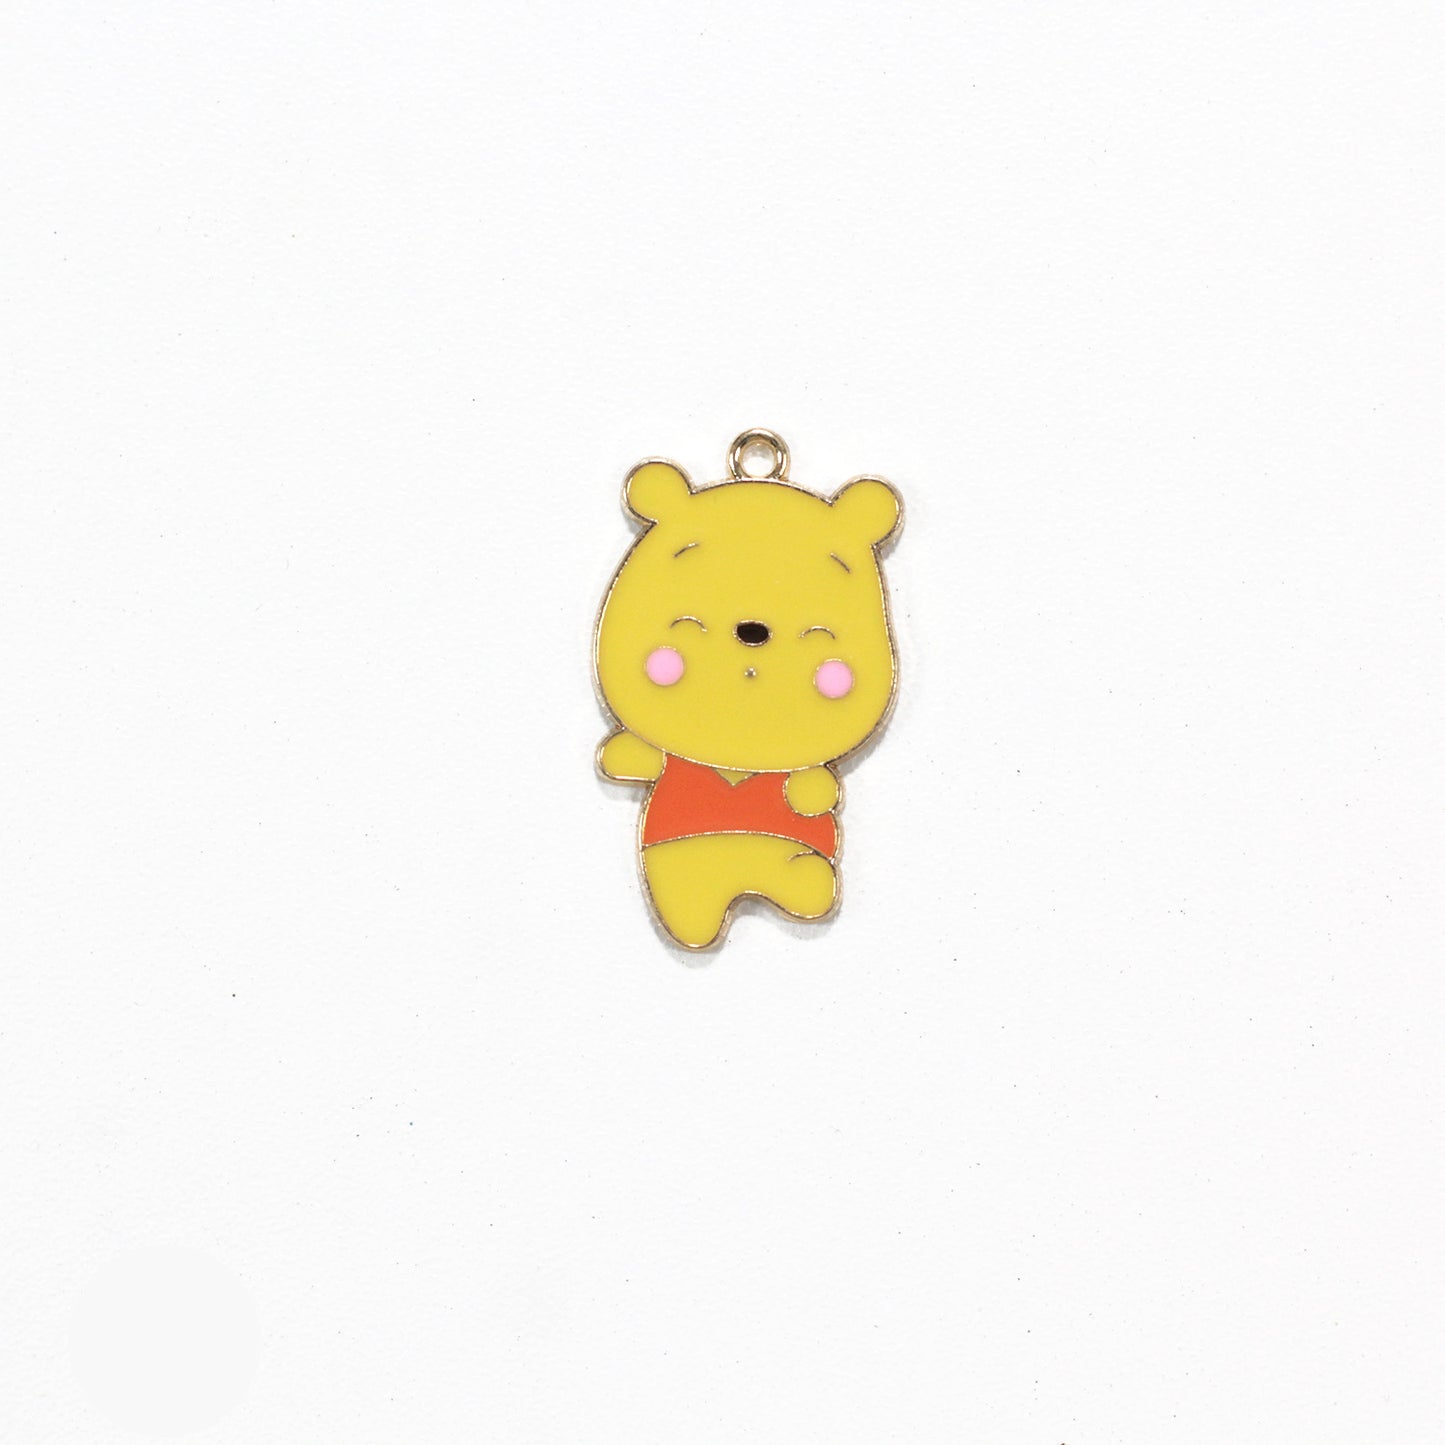 Winnie the Pooh Metal Charms Earrings Accessories Pendant Accessories DIY